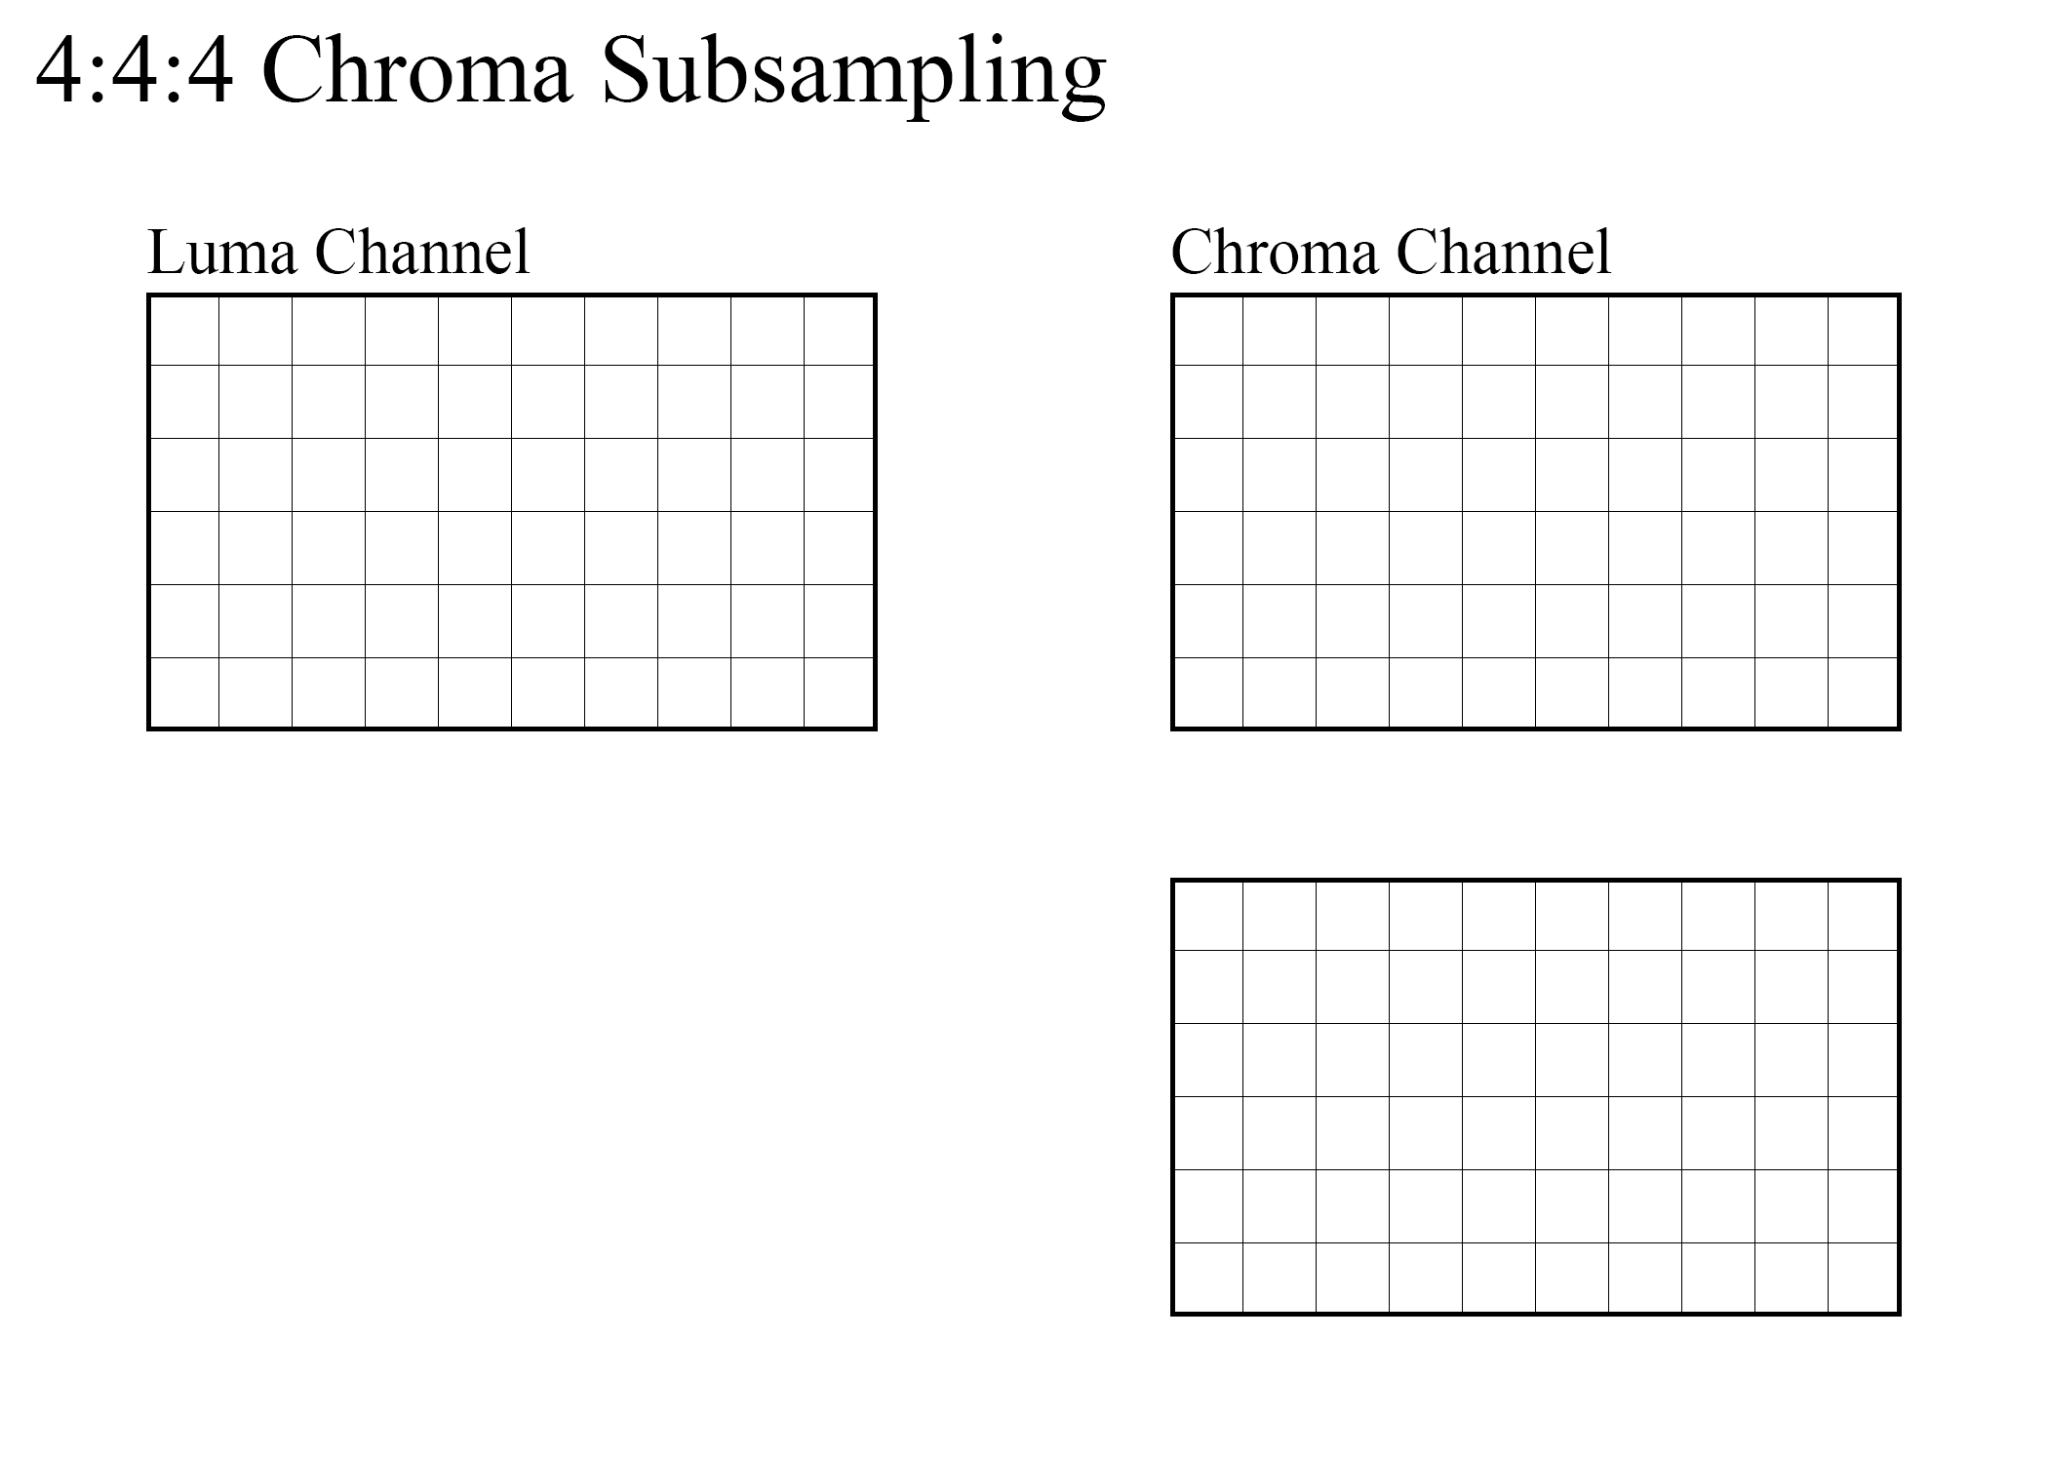 4:4:4 Chroma subsampling